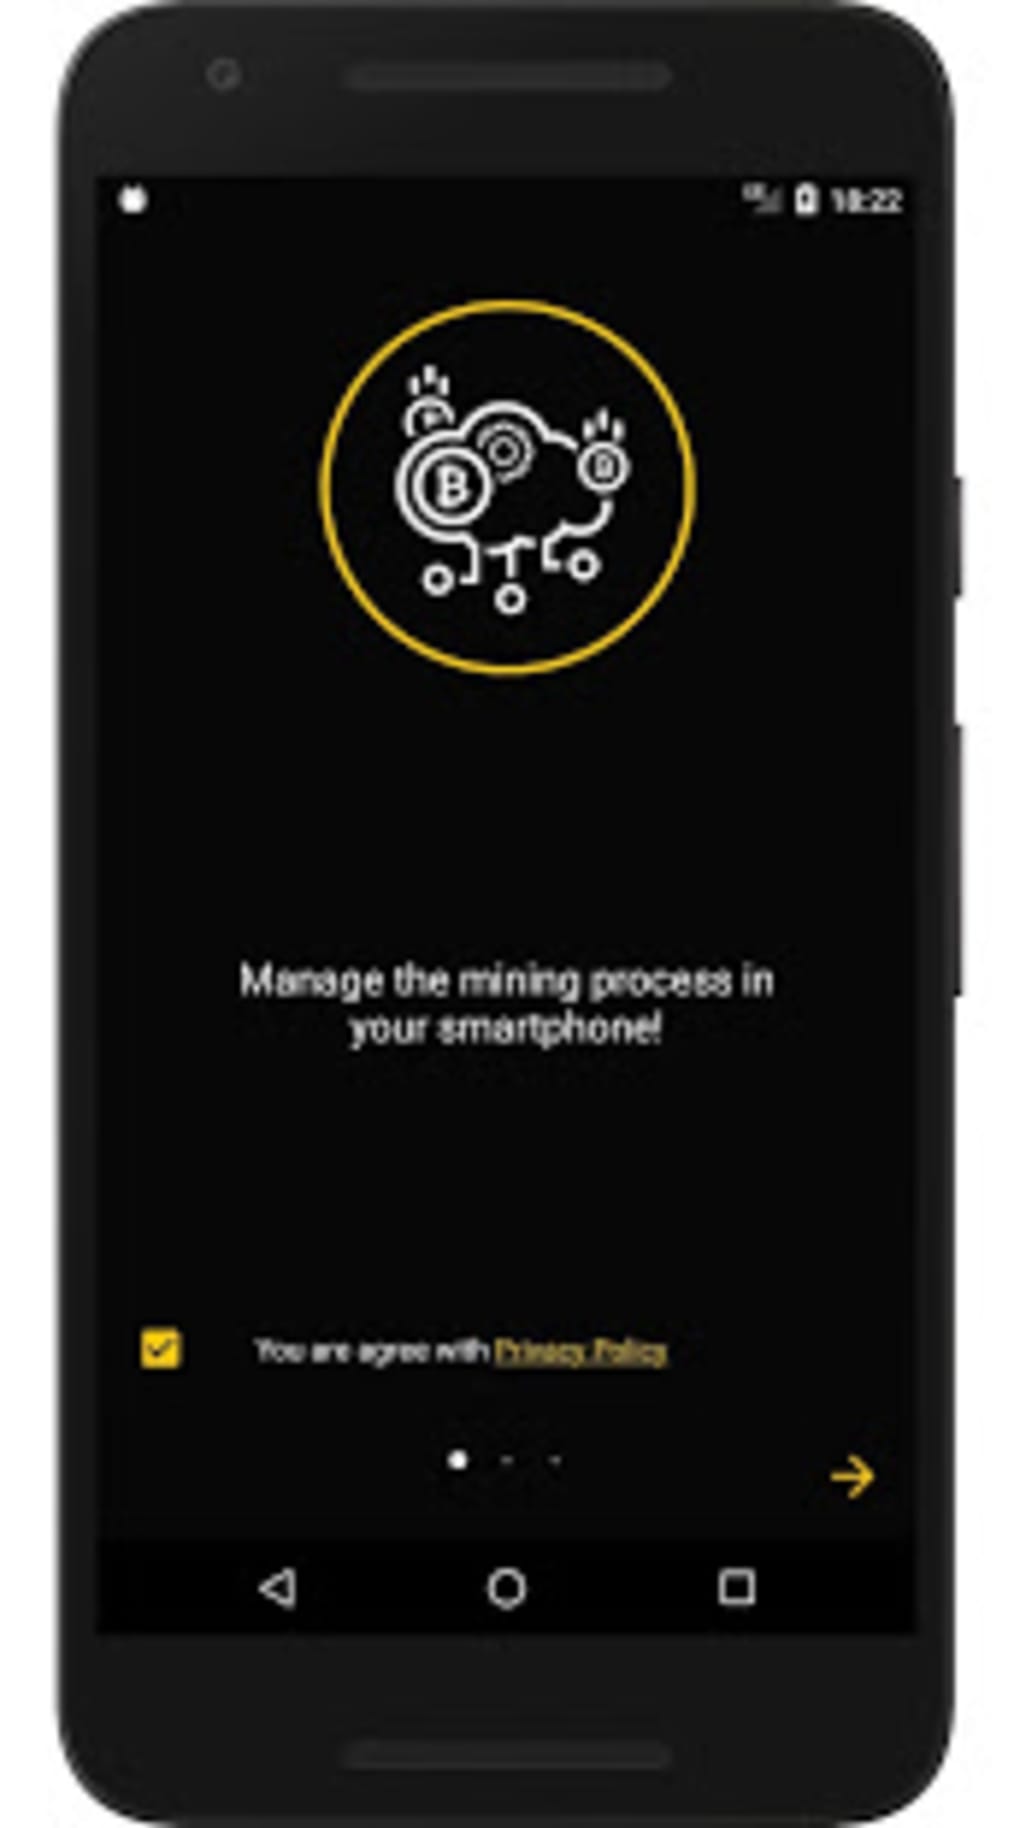 BTC Miner Pro APK (Android App) - Free Download